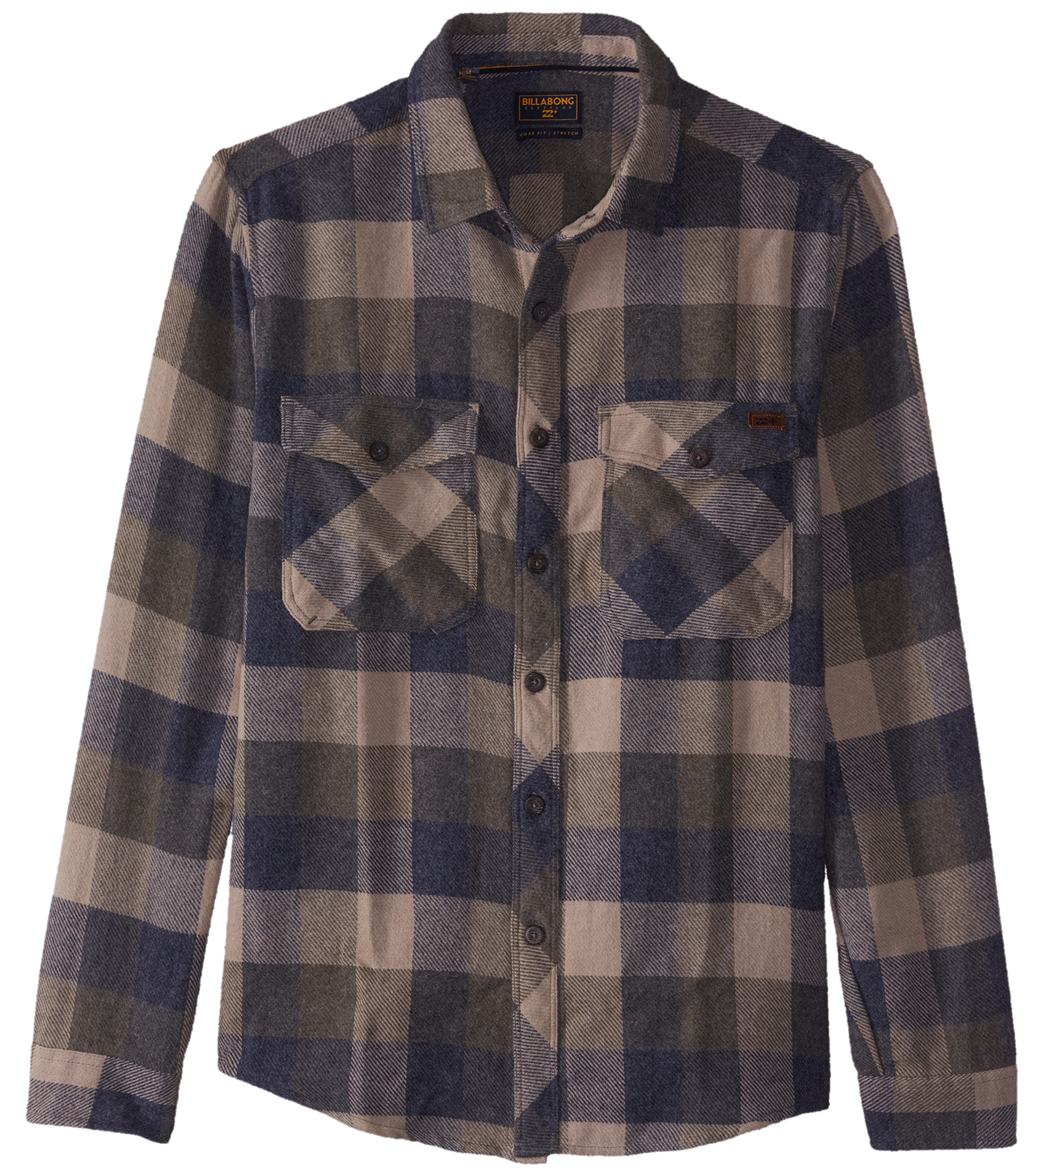 Billabong Men's Ventura Flannel Shirt - Military Small Cotton/Polyester - Swimoutlet.com